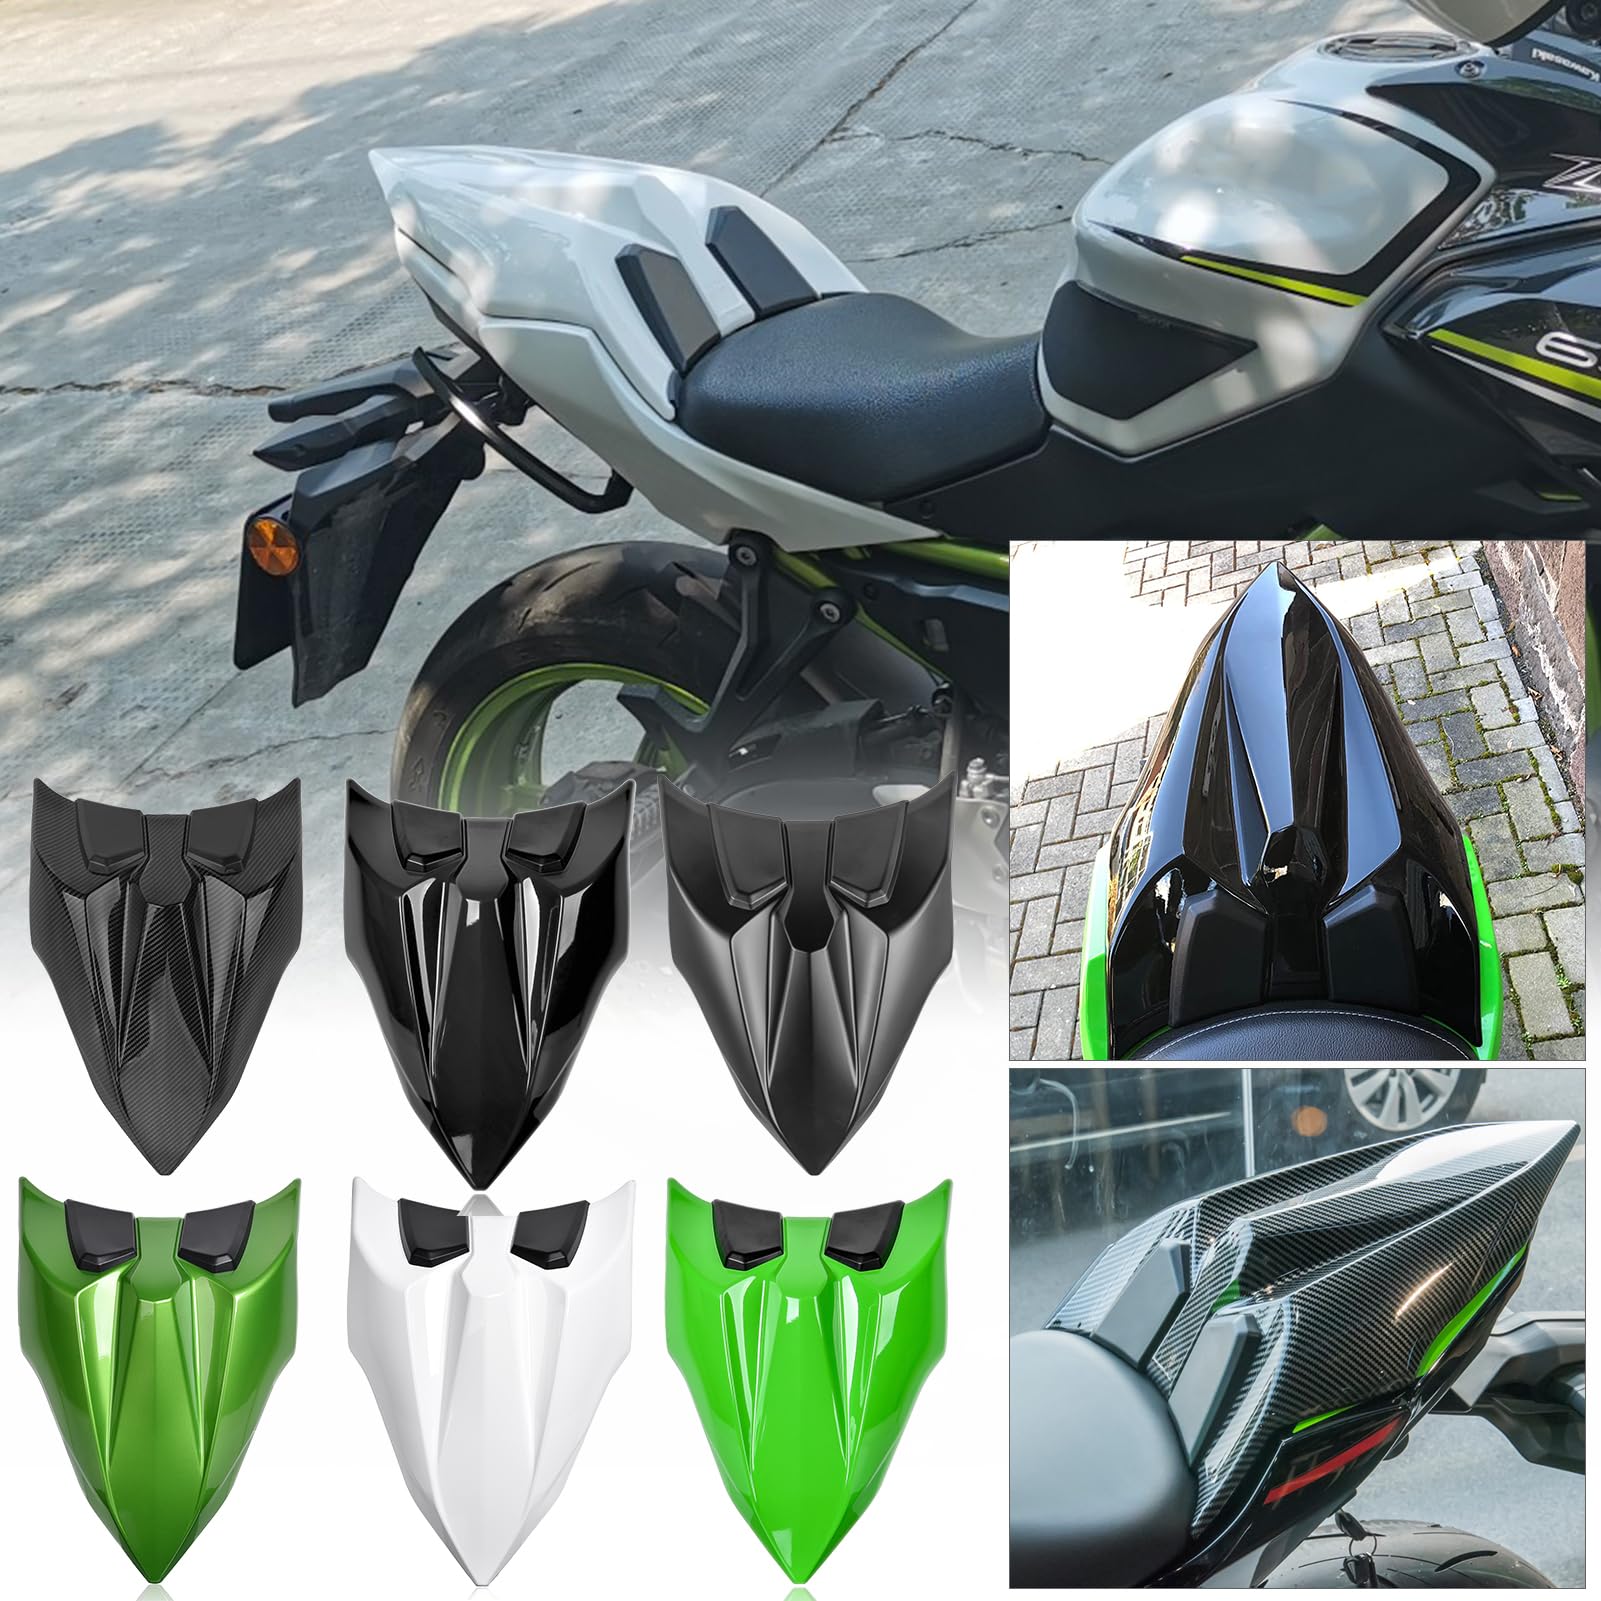 Motorrad-Sozius-Soziussitzabdeckung aus Hart-ABS, kompatibel mit Z650 Ninja 650 Z-650 NINJA-650 2017 2018 2019 2020 2021 2022 2023 2024, Sitzhöcker-Zubehör (Dunkelgrün) von TAZGANTAX